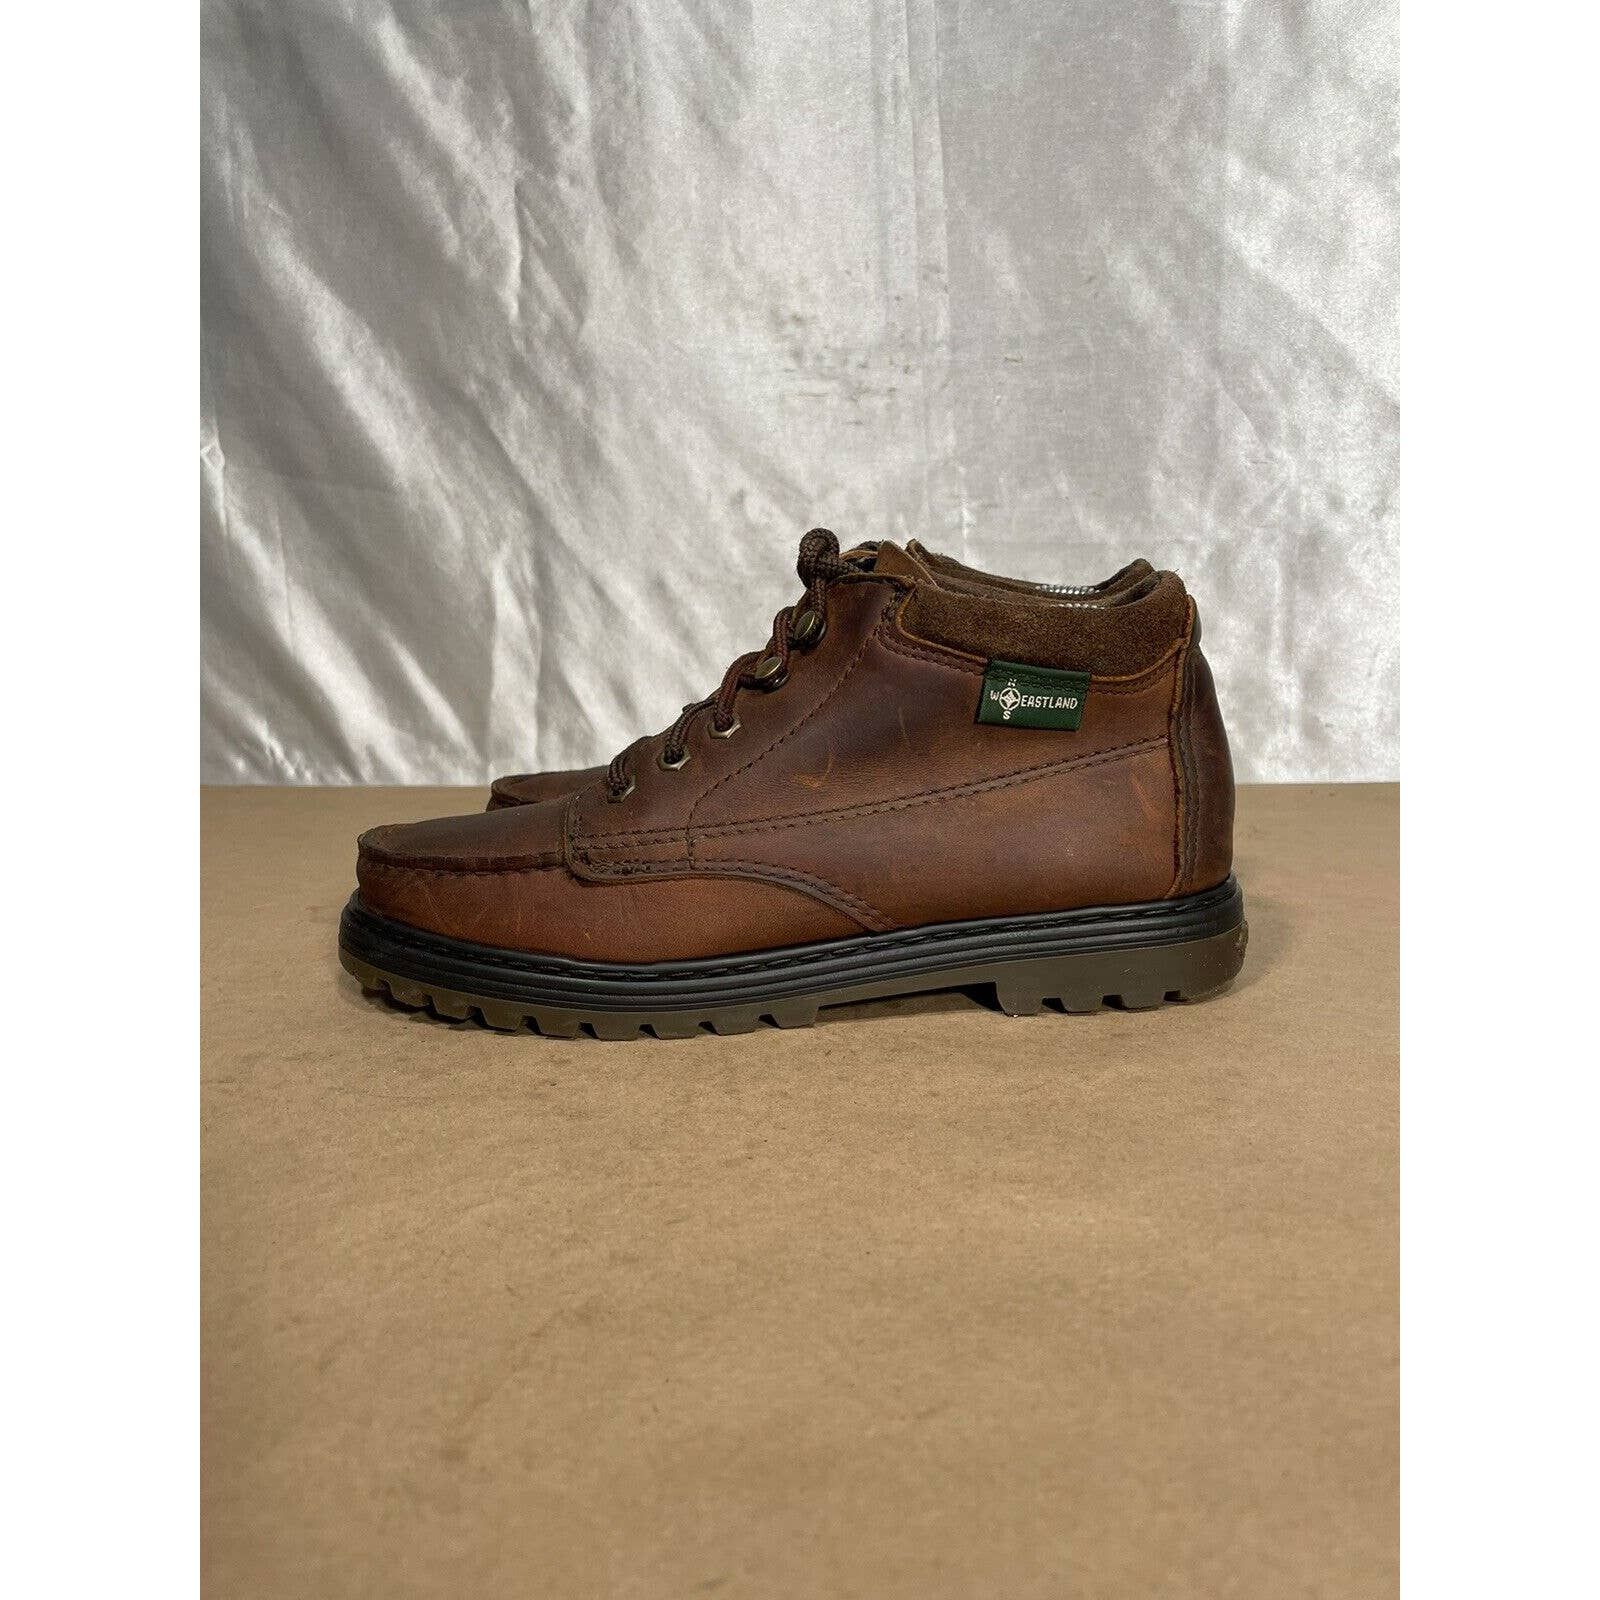 Eastland Eastland Brown Leather Moc Toe Hiking Boots Wmns Sz 8.5 M ...